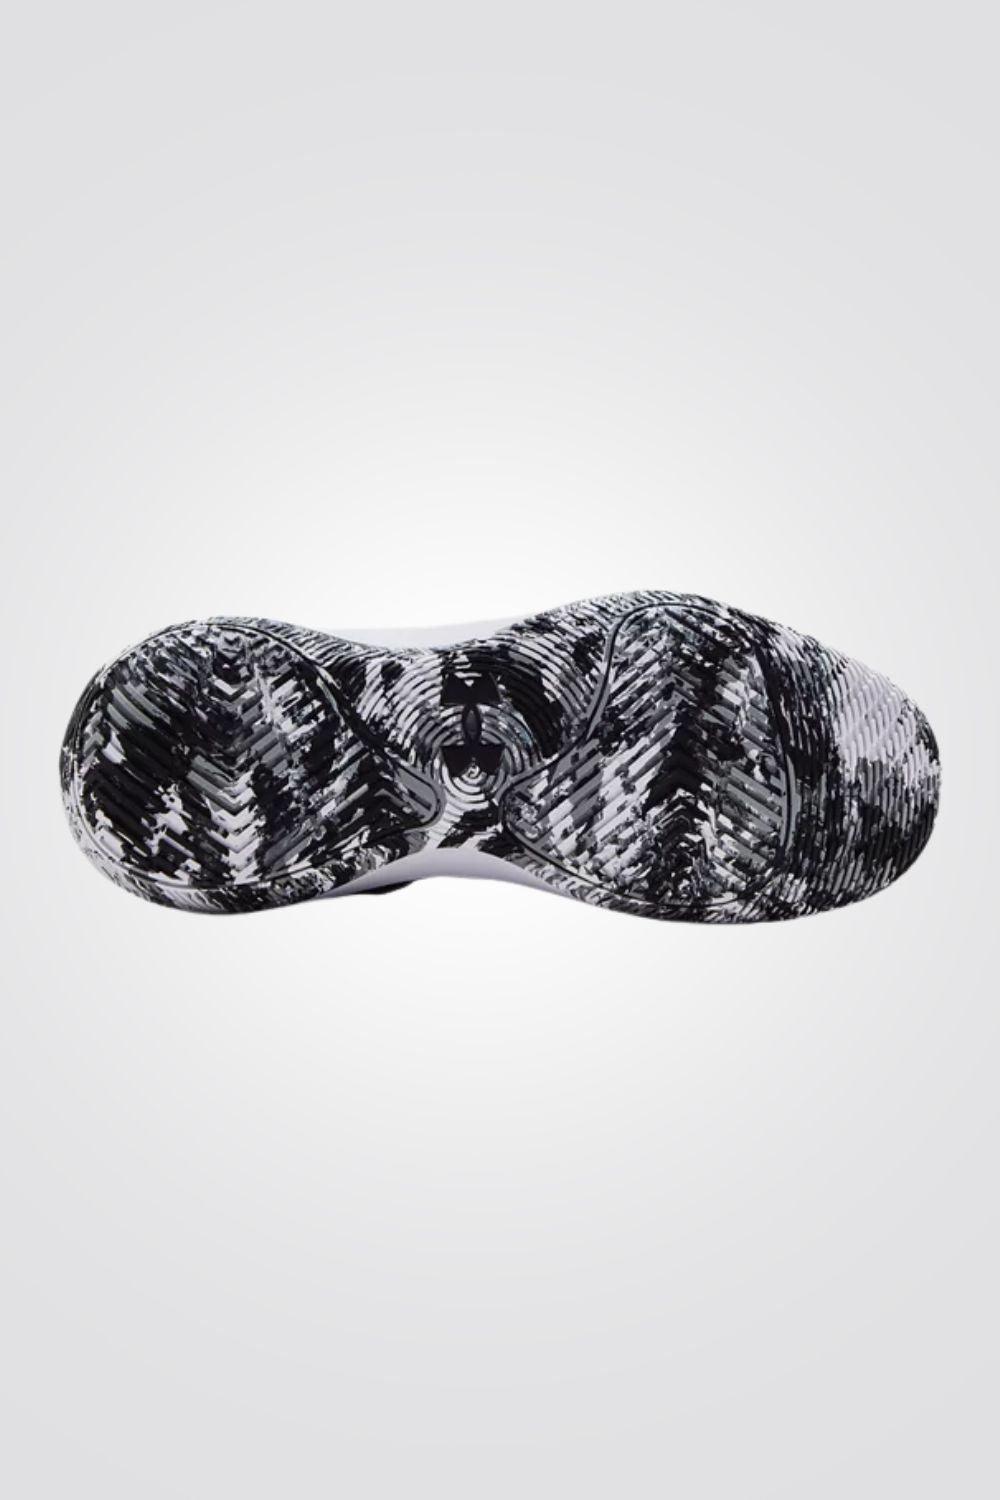 UNDER ARMOUR - נעלי ספורט JET '21 BASKETBALL בצבע שחור ולבן - MASHBIR//365